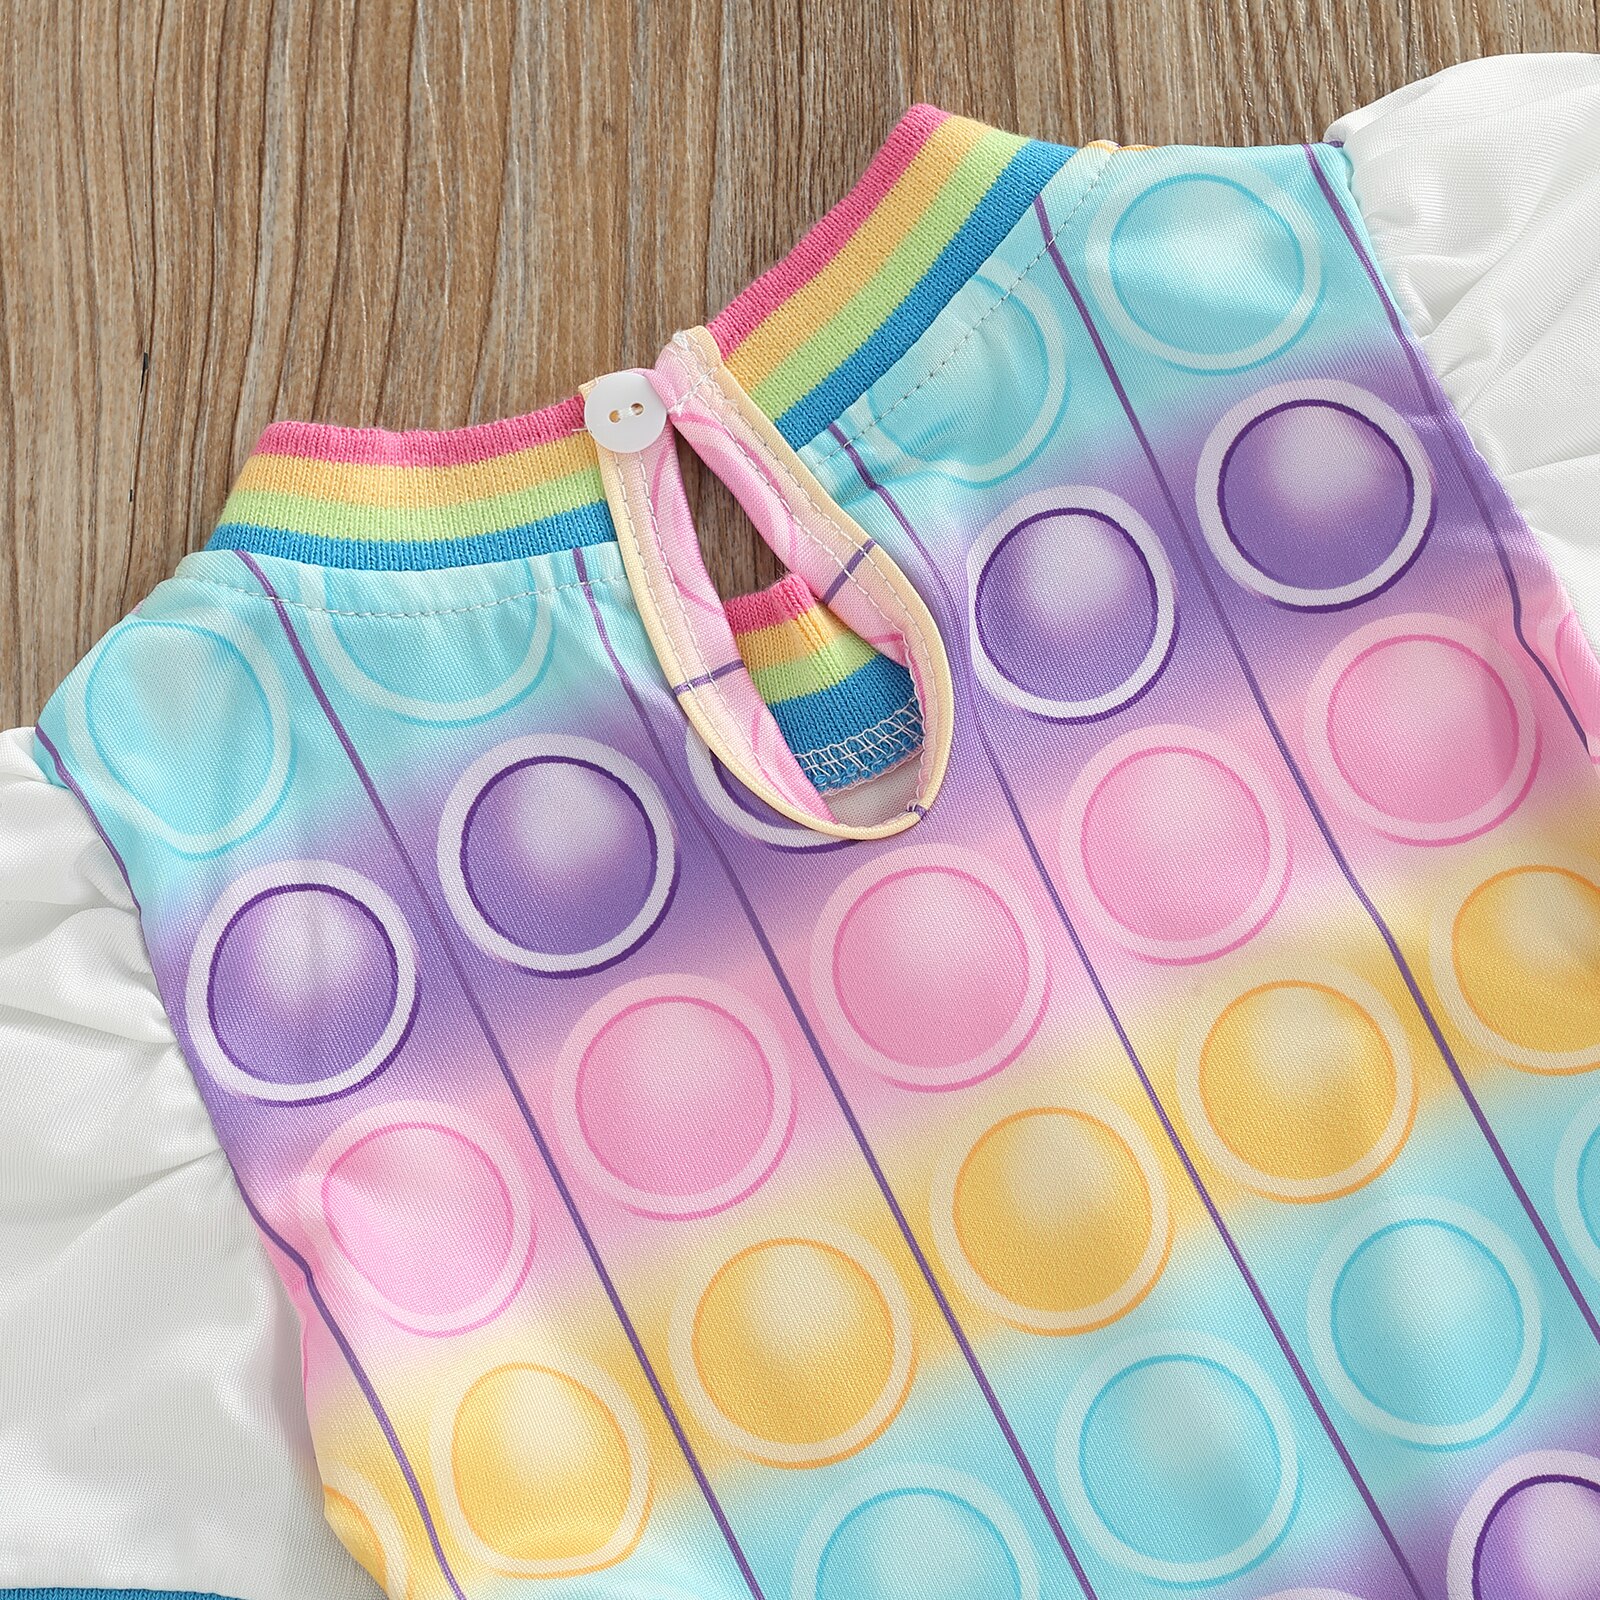 Citgeett-Summer-Kids-Girls-Short-Skirt-Suit-Pattern-Rainbow-Stripes-Short-Sleeves-Romper-Jumpsuit-Tutu-Skirt-4